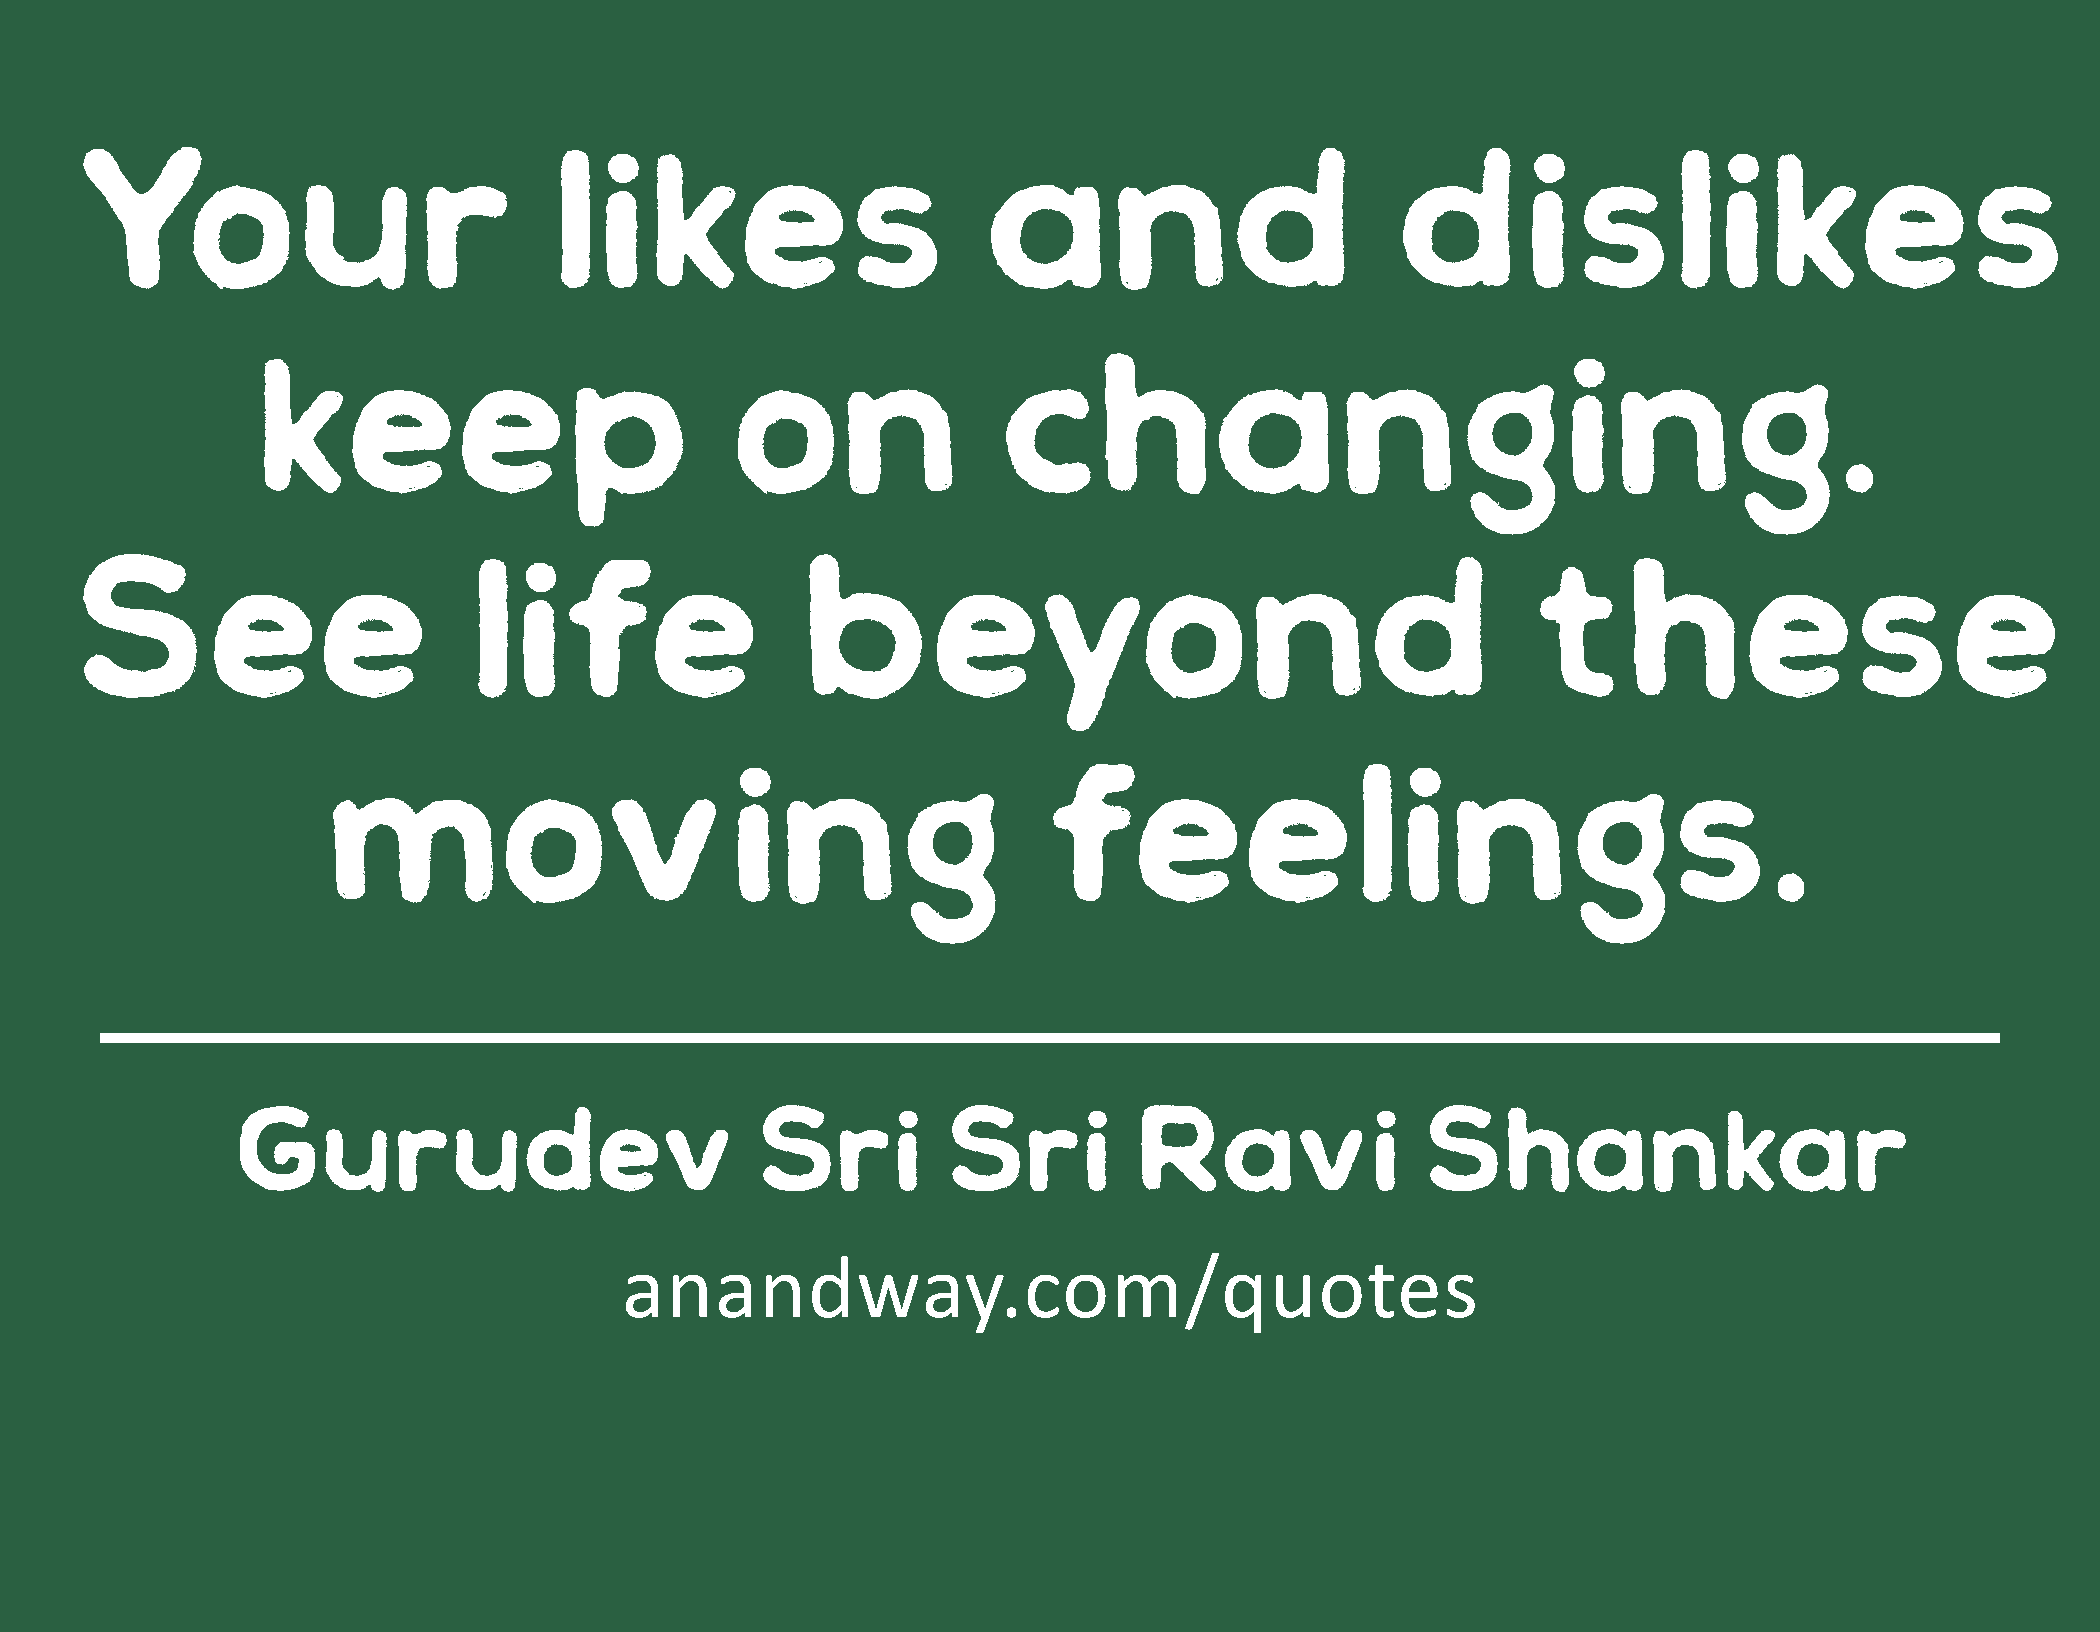 Your likes and dislikes keep on changing. See life beyond these moving feelings. 
 -Gurudev Sri Sri Ravi Shankar